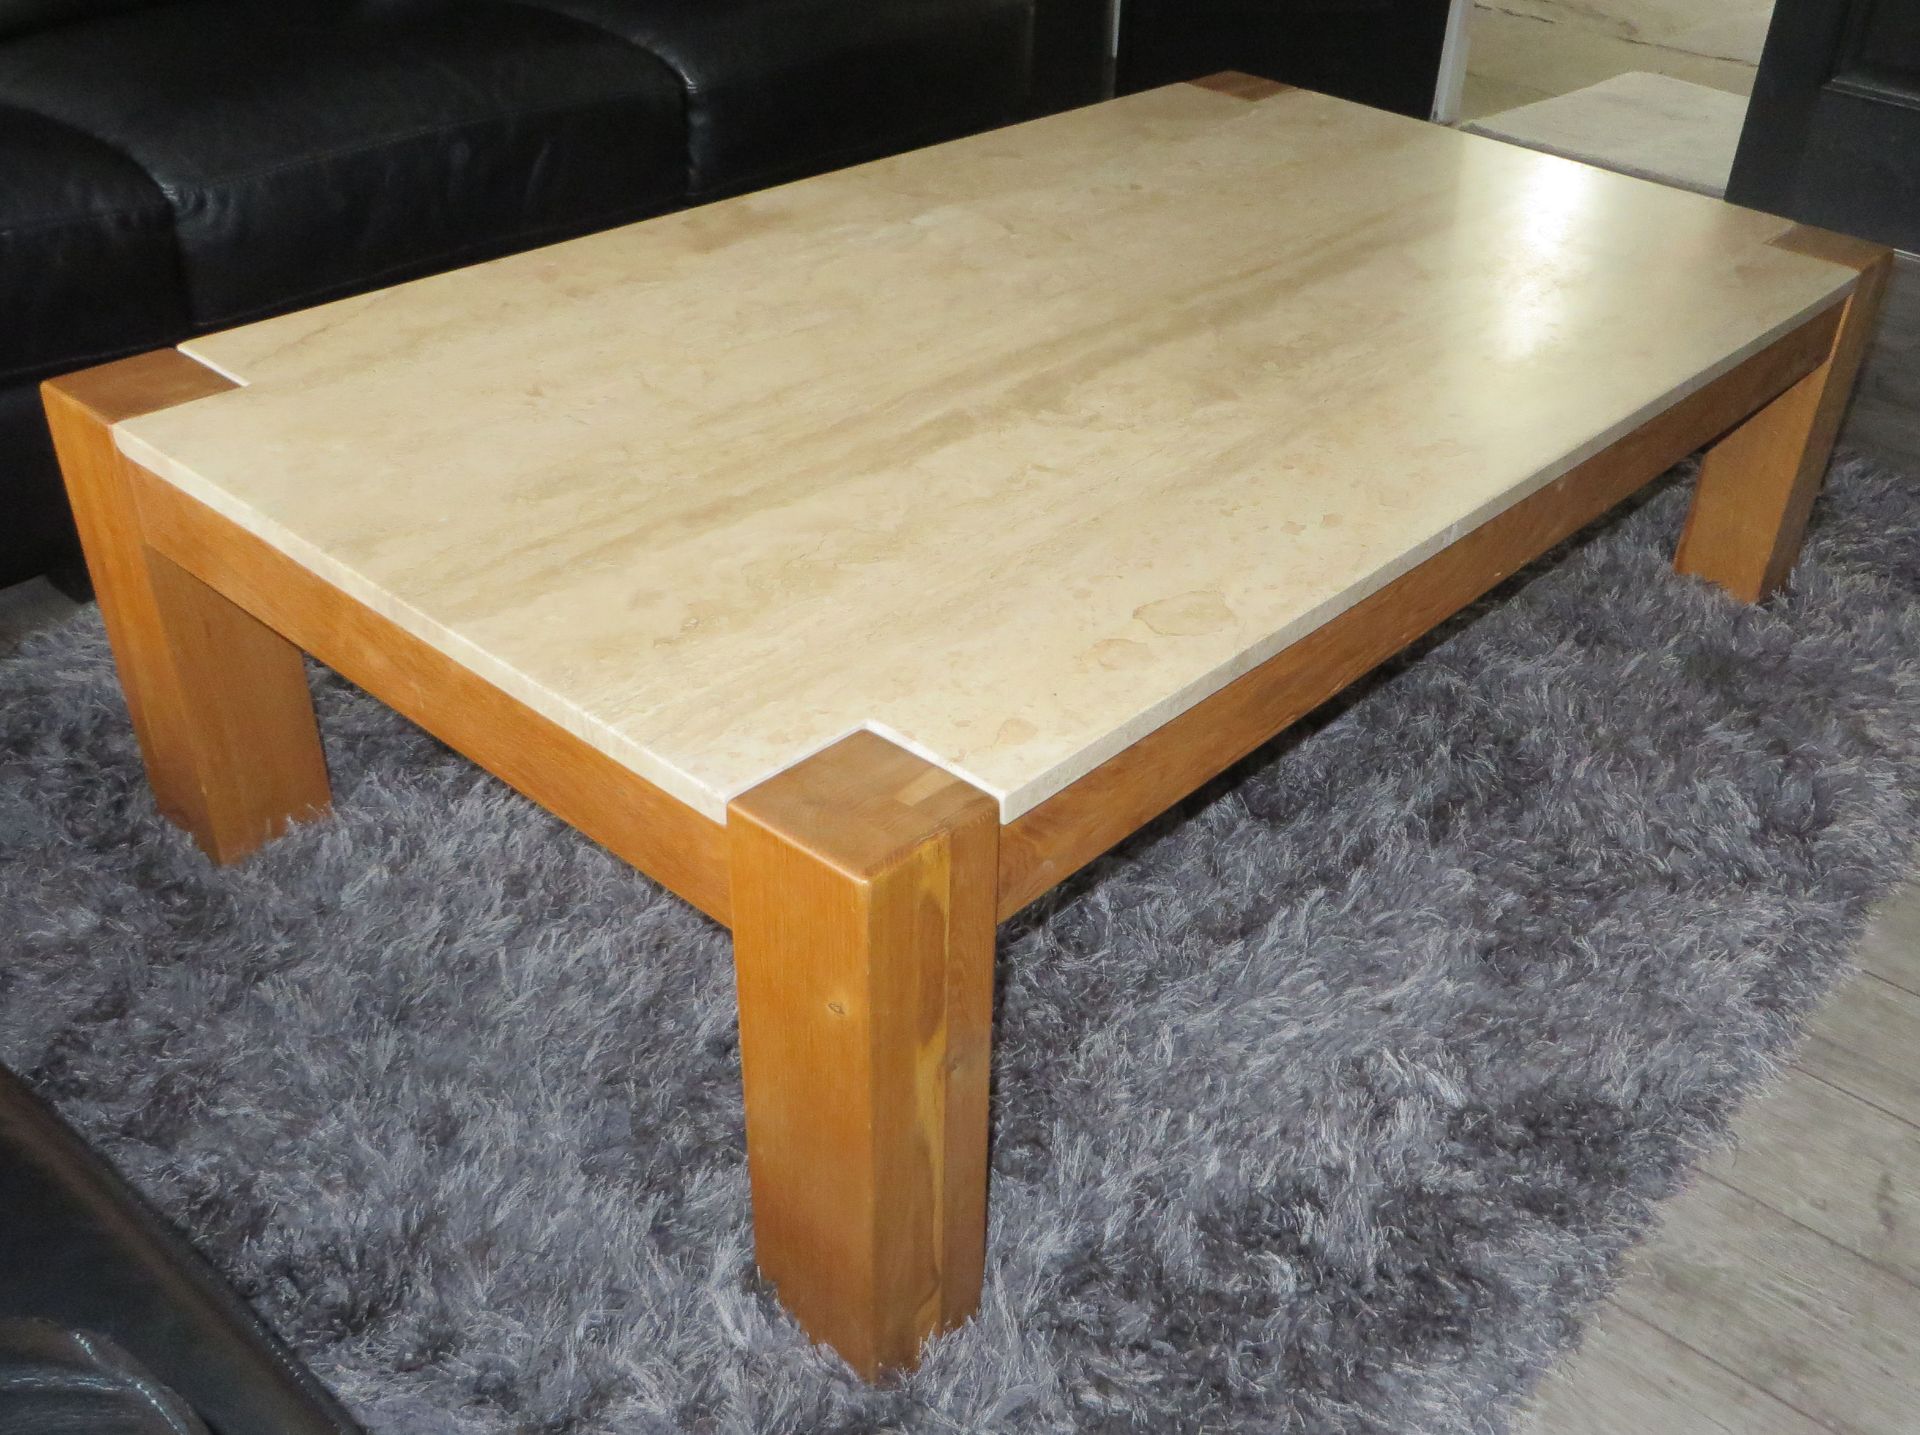 1 x Contemporary Oak and Travertine Coffee Table - CL175 - Location: Bradshaw BL2 - NO VAT